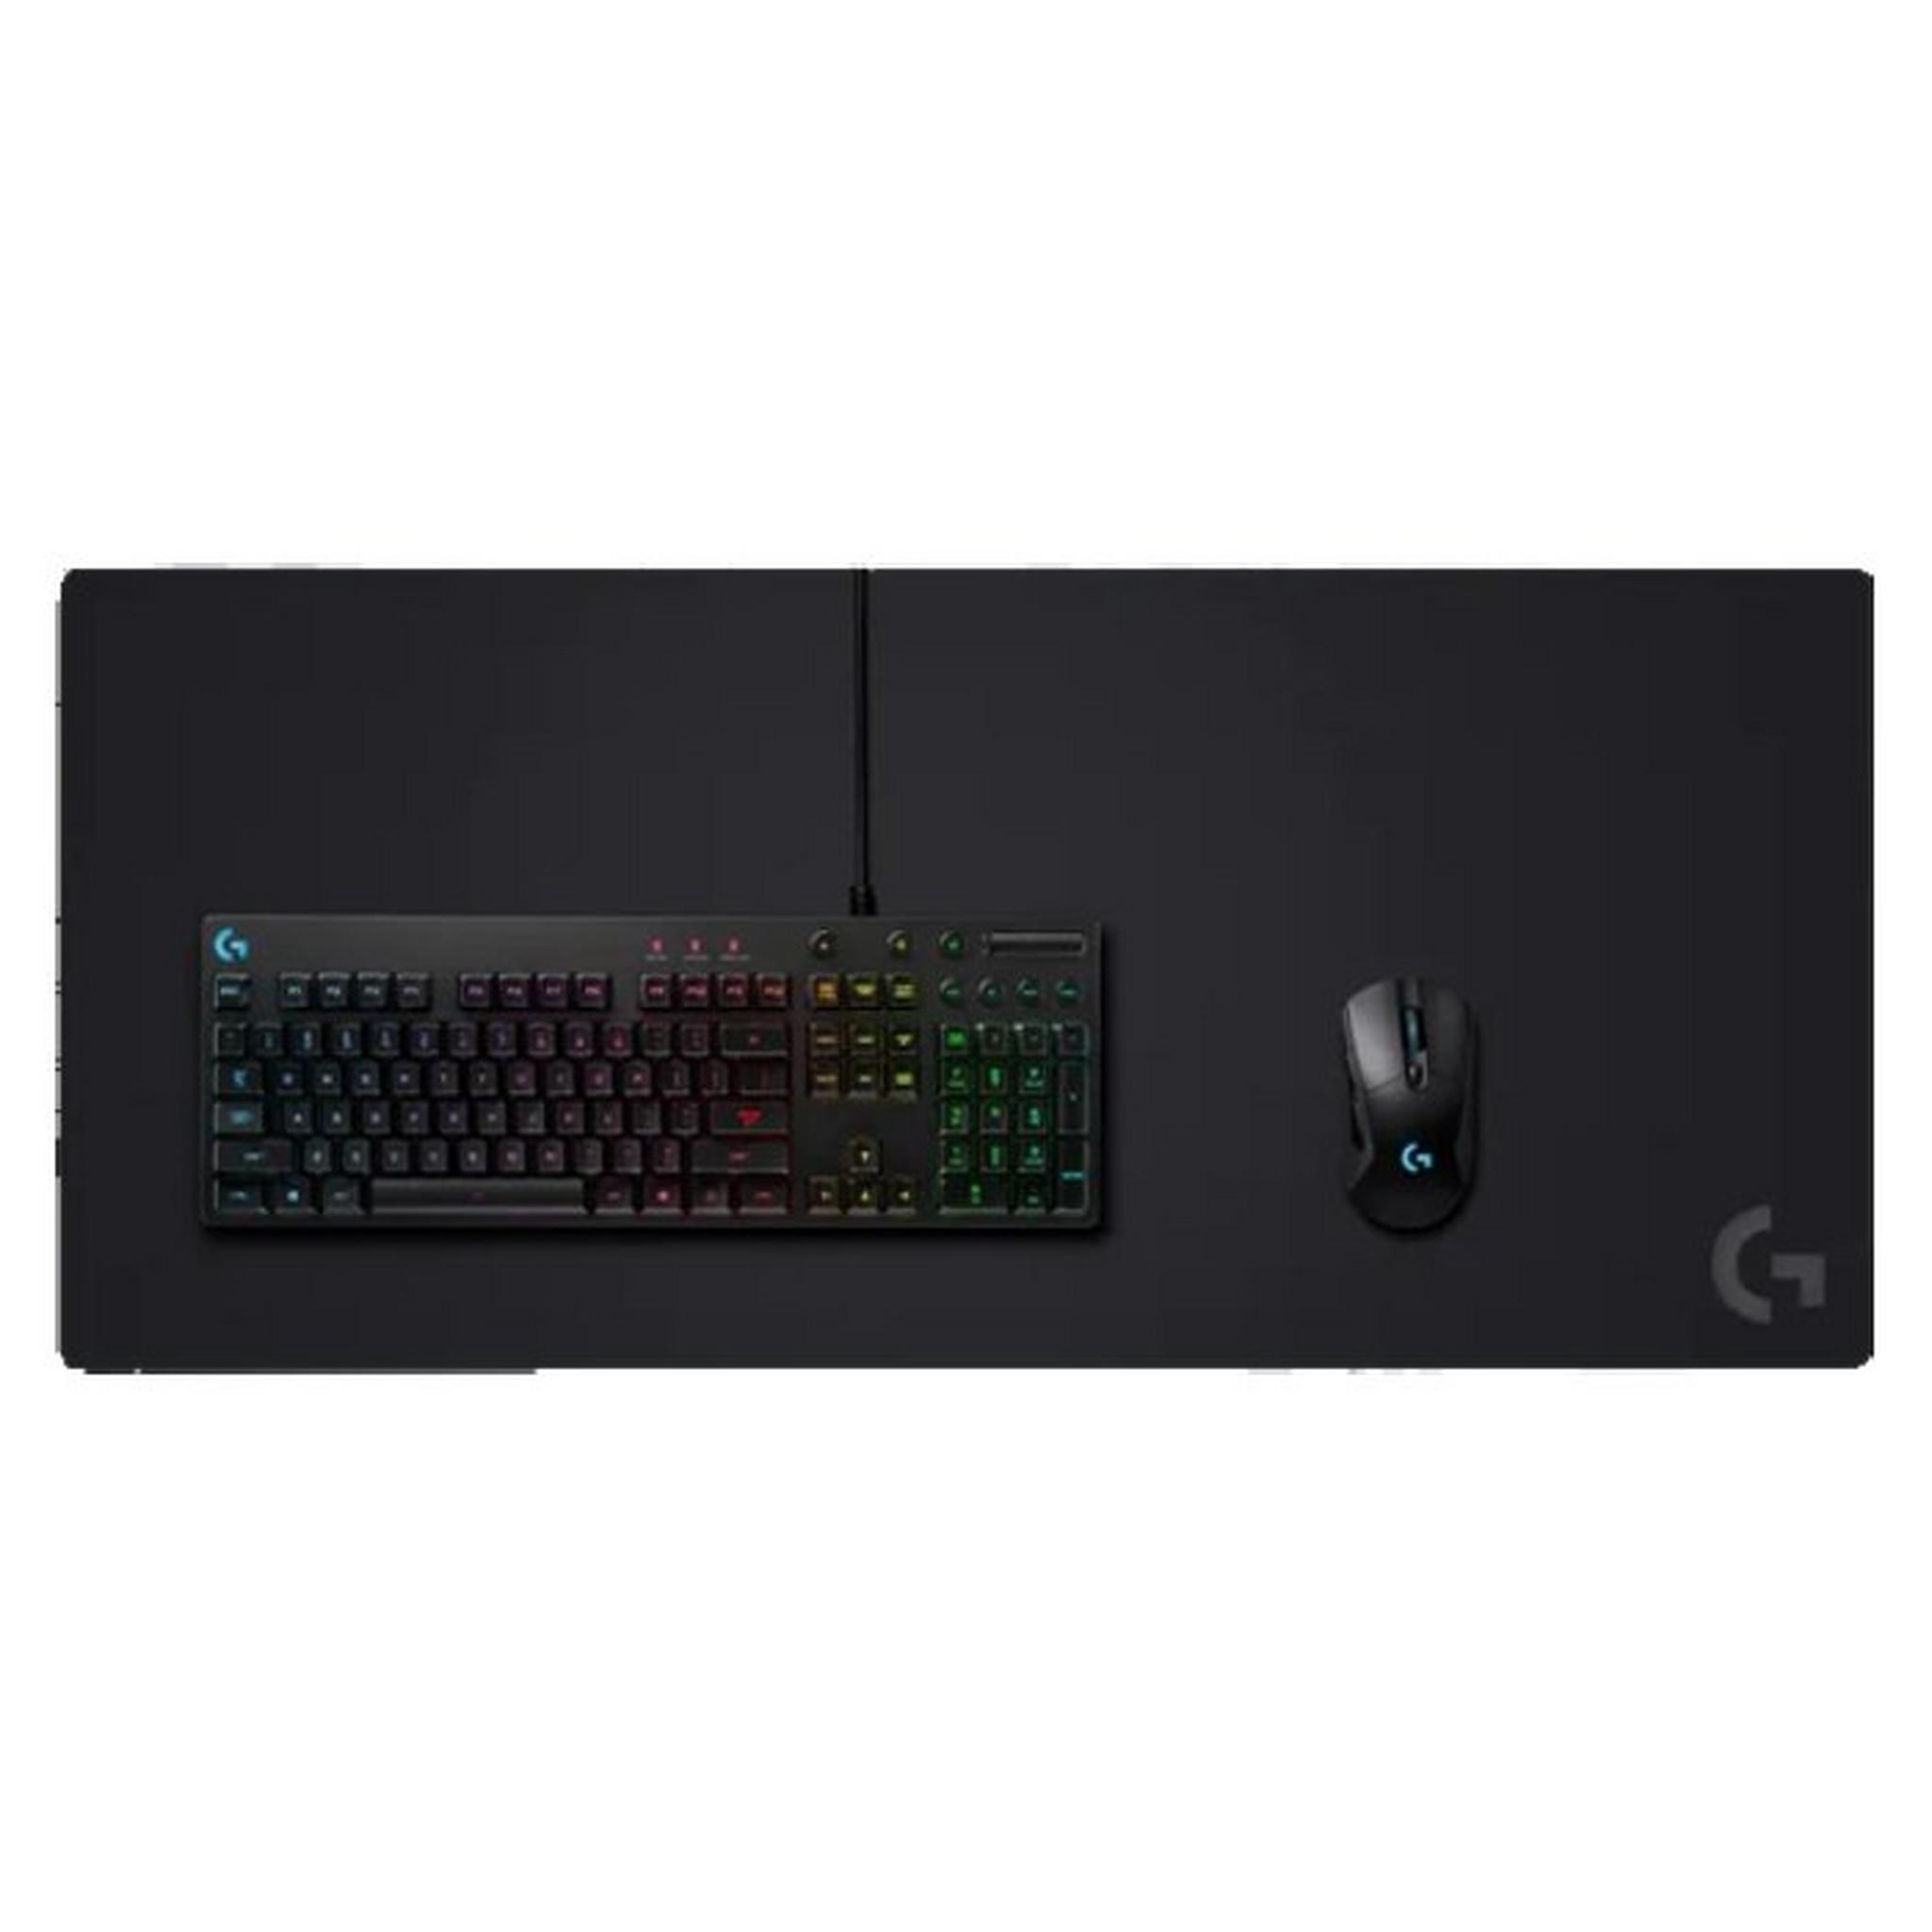 Logitech G840 XL Gaming Mousepad - Black